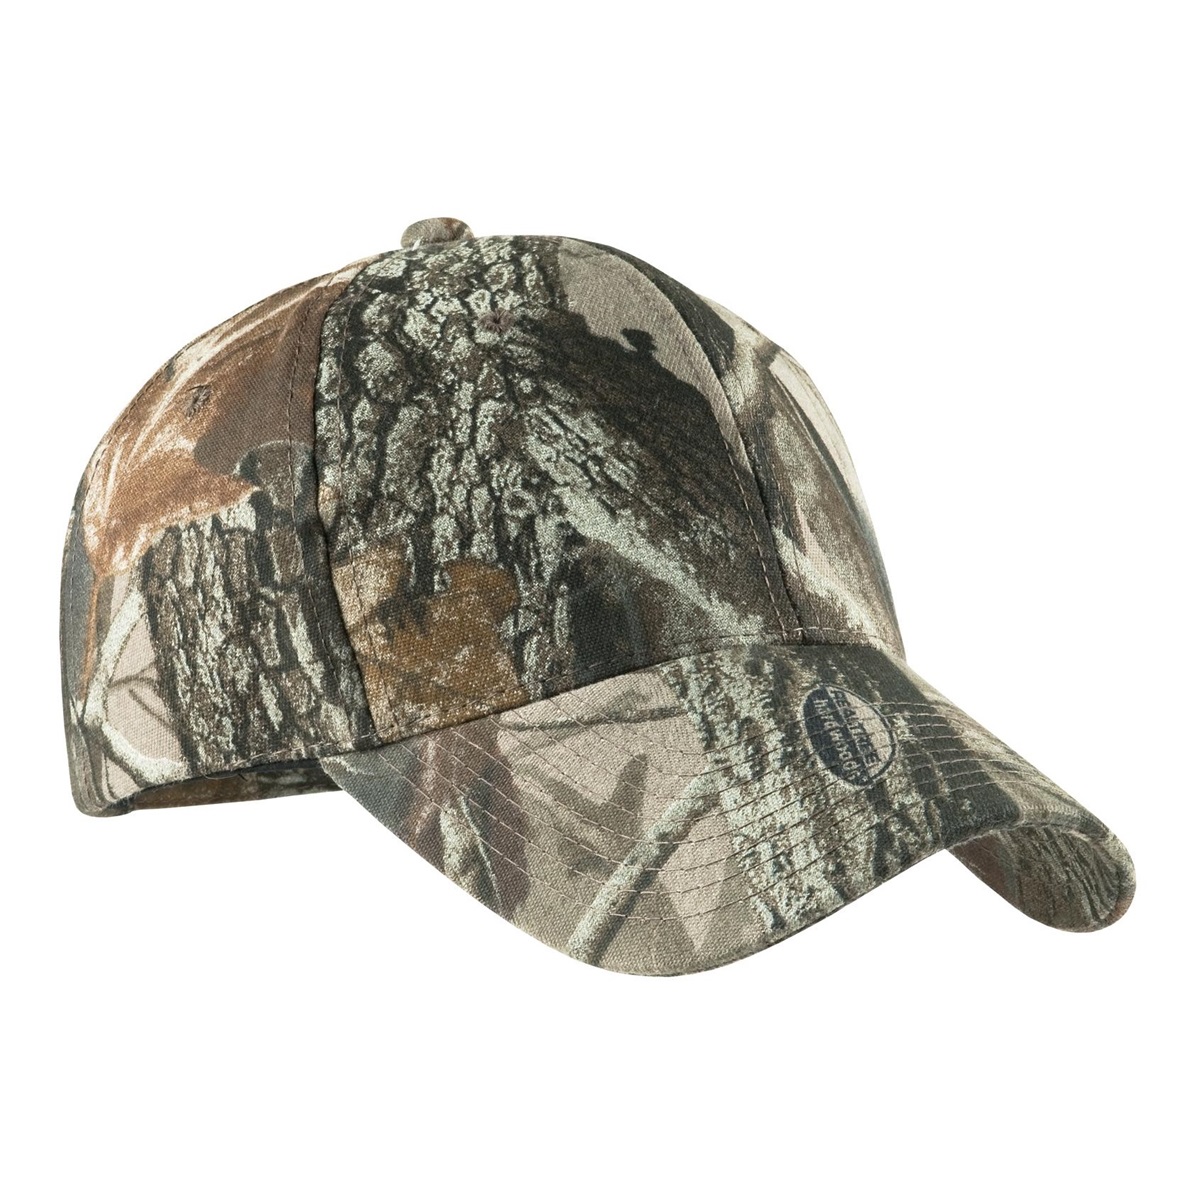 Port Authority Pro Camouflage Series Cap-One Size (Realtree Hardwoods), Adult unisex